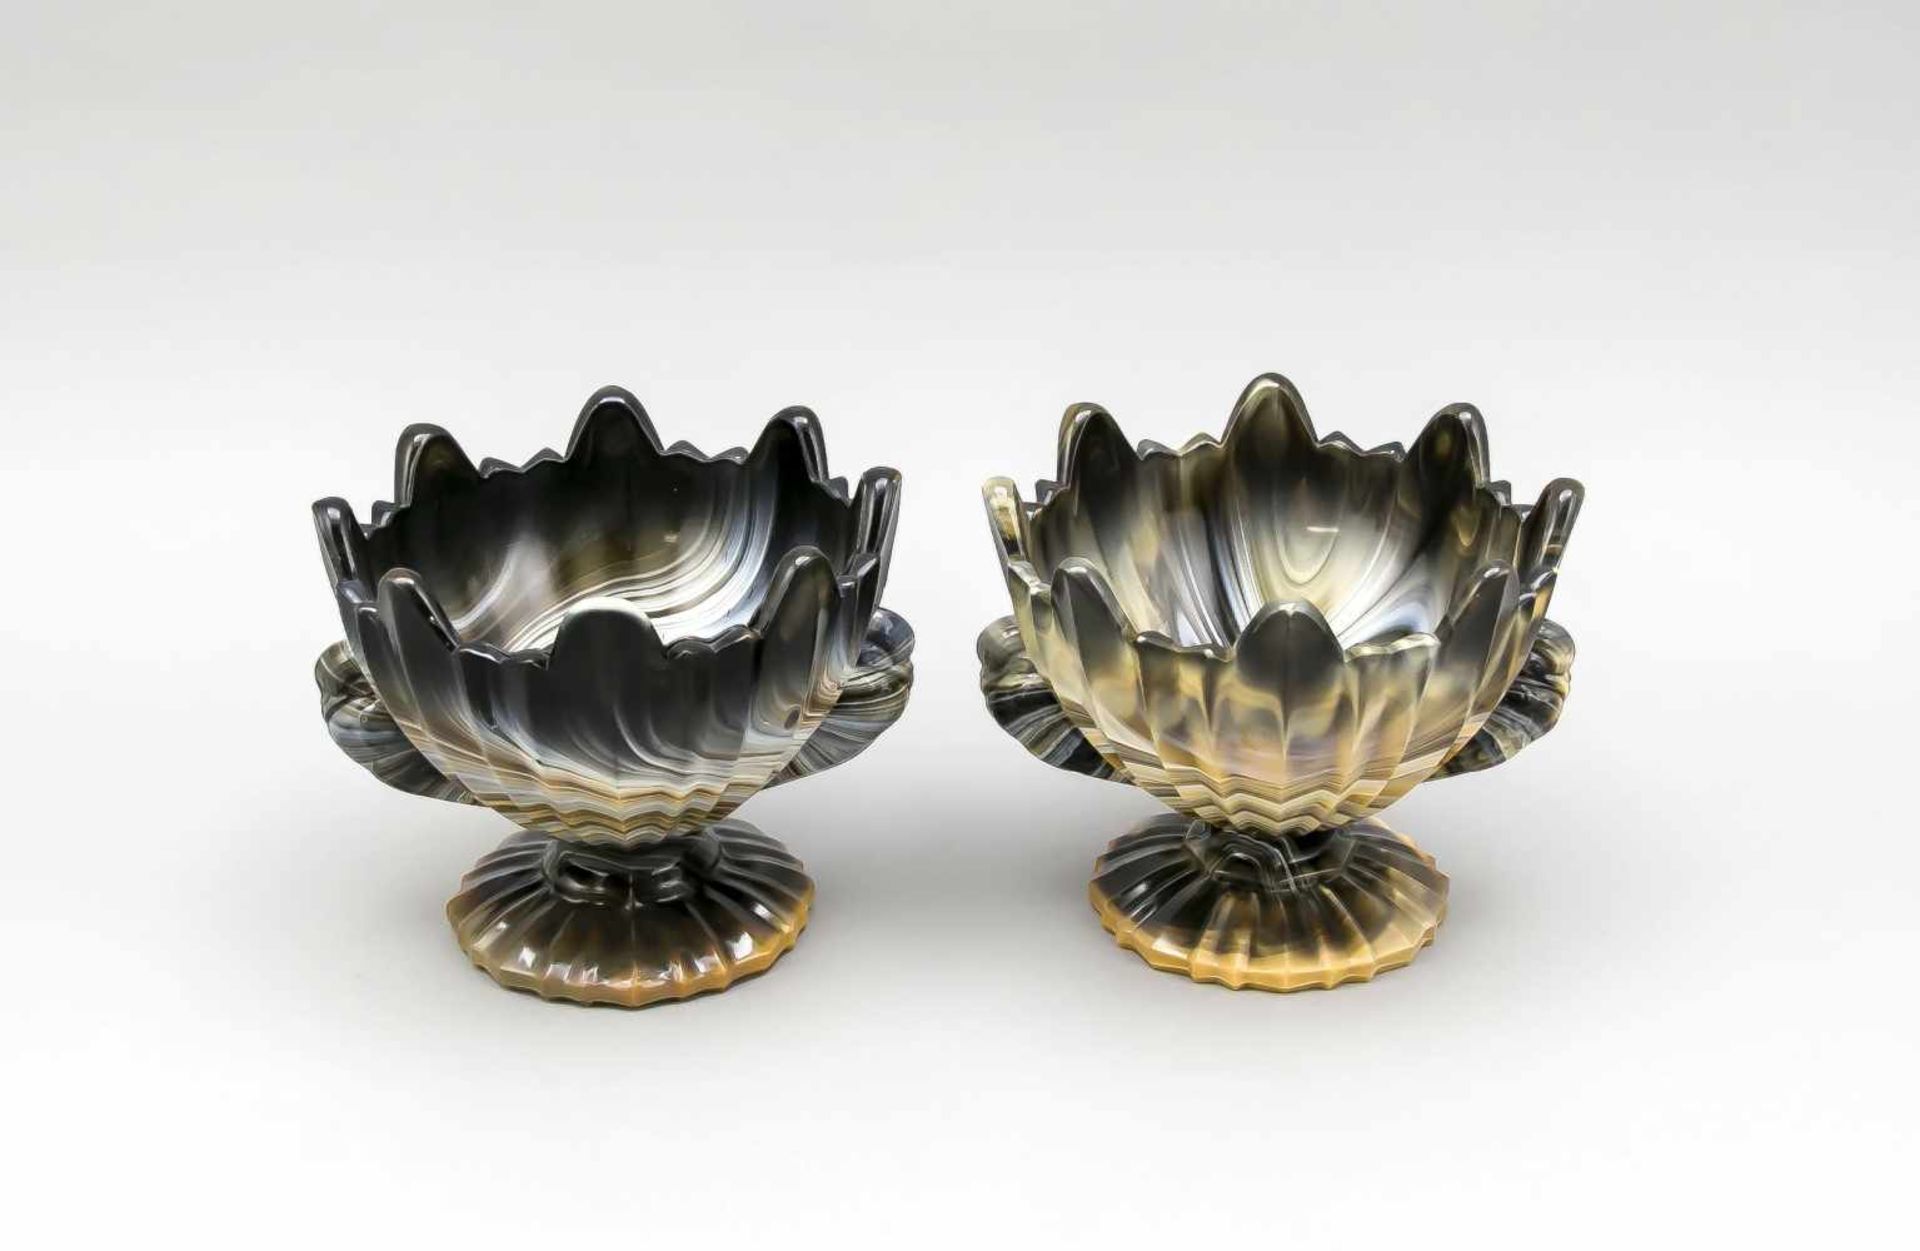 Pair of round foot bowls, 20th century, model blown, round wavy base, short shaft, bowlwith bird